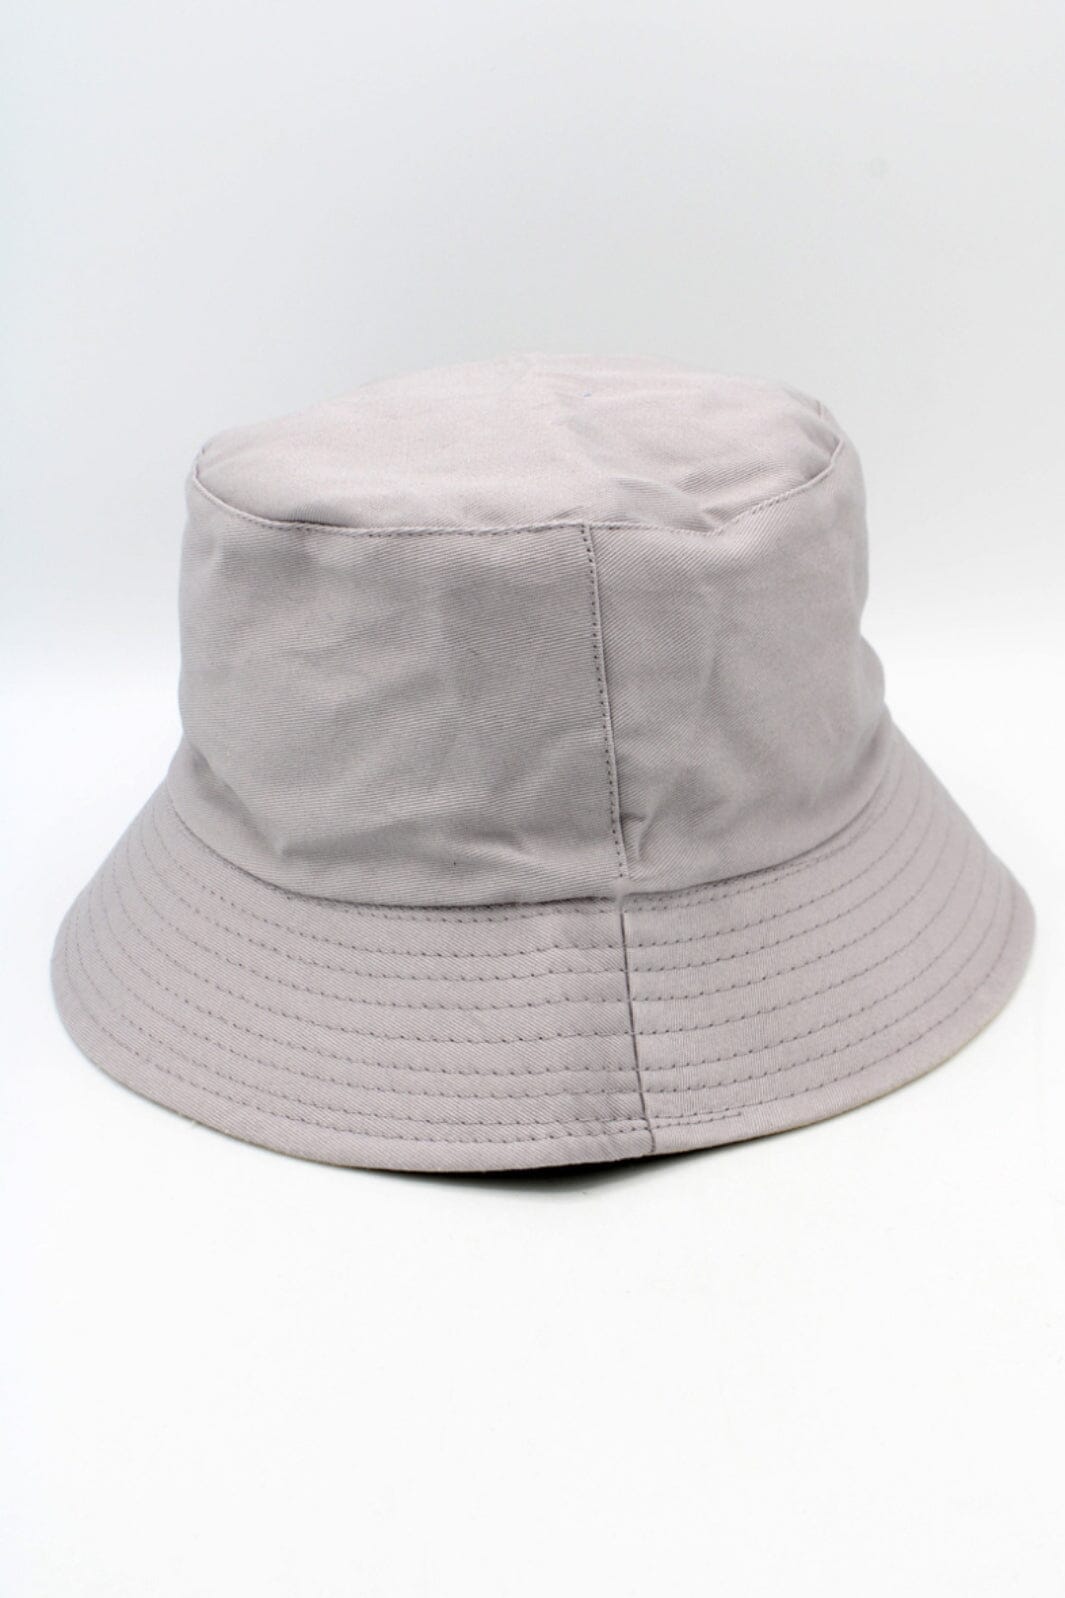 Anobel Copenhagen - Reversible Two-Tone Cotton Bucket Hat 12577 - Light Gray Hatte 